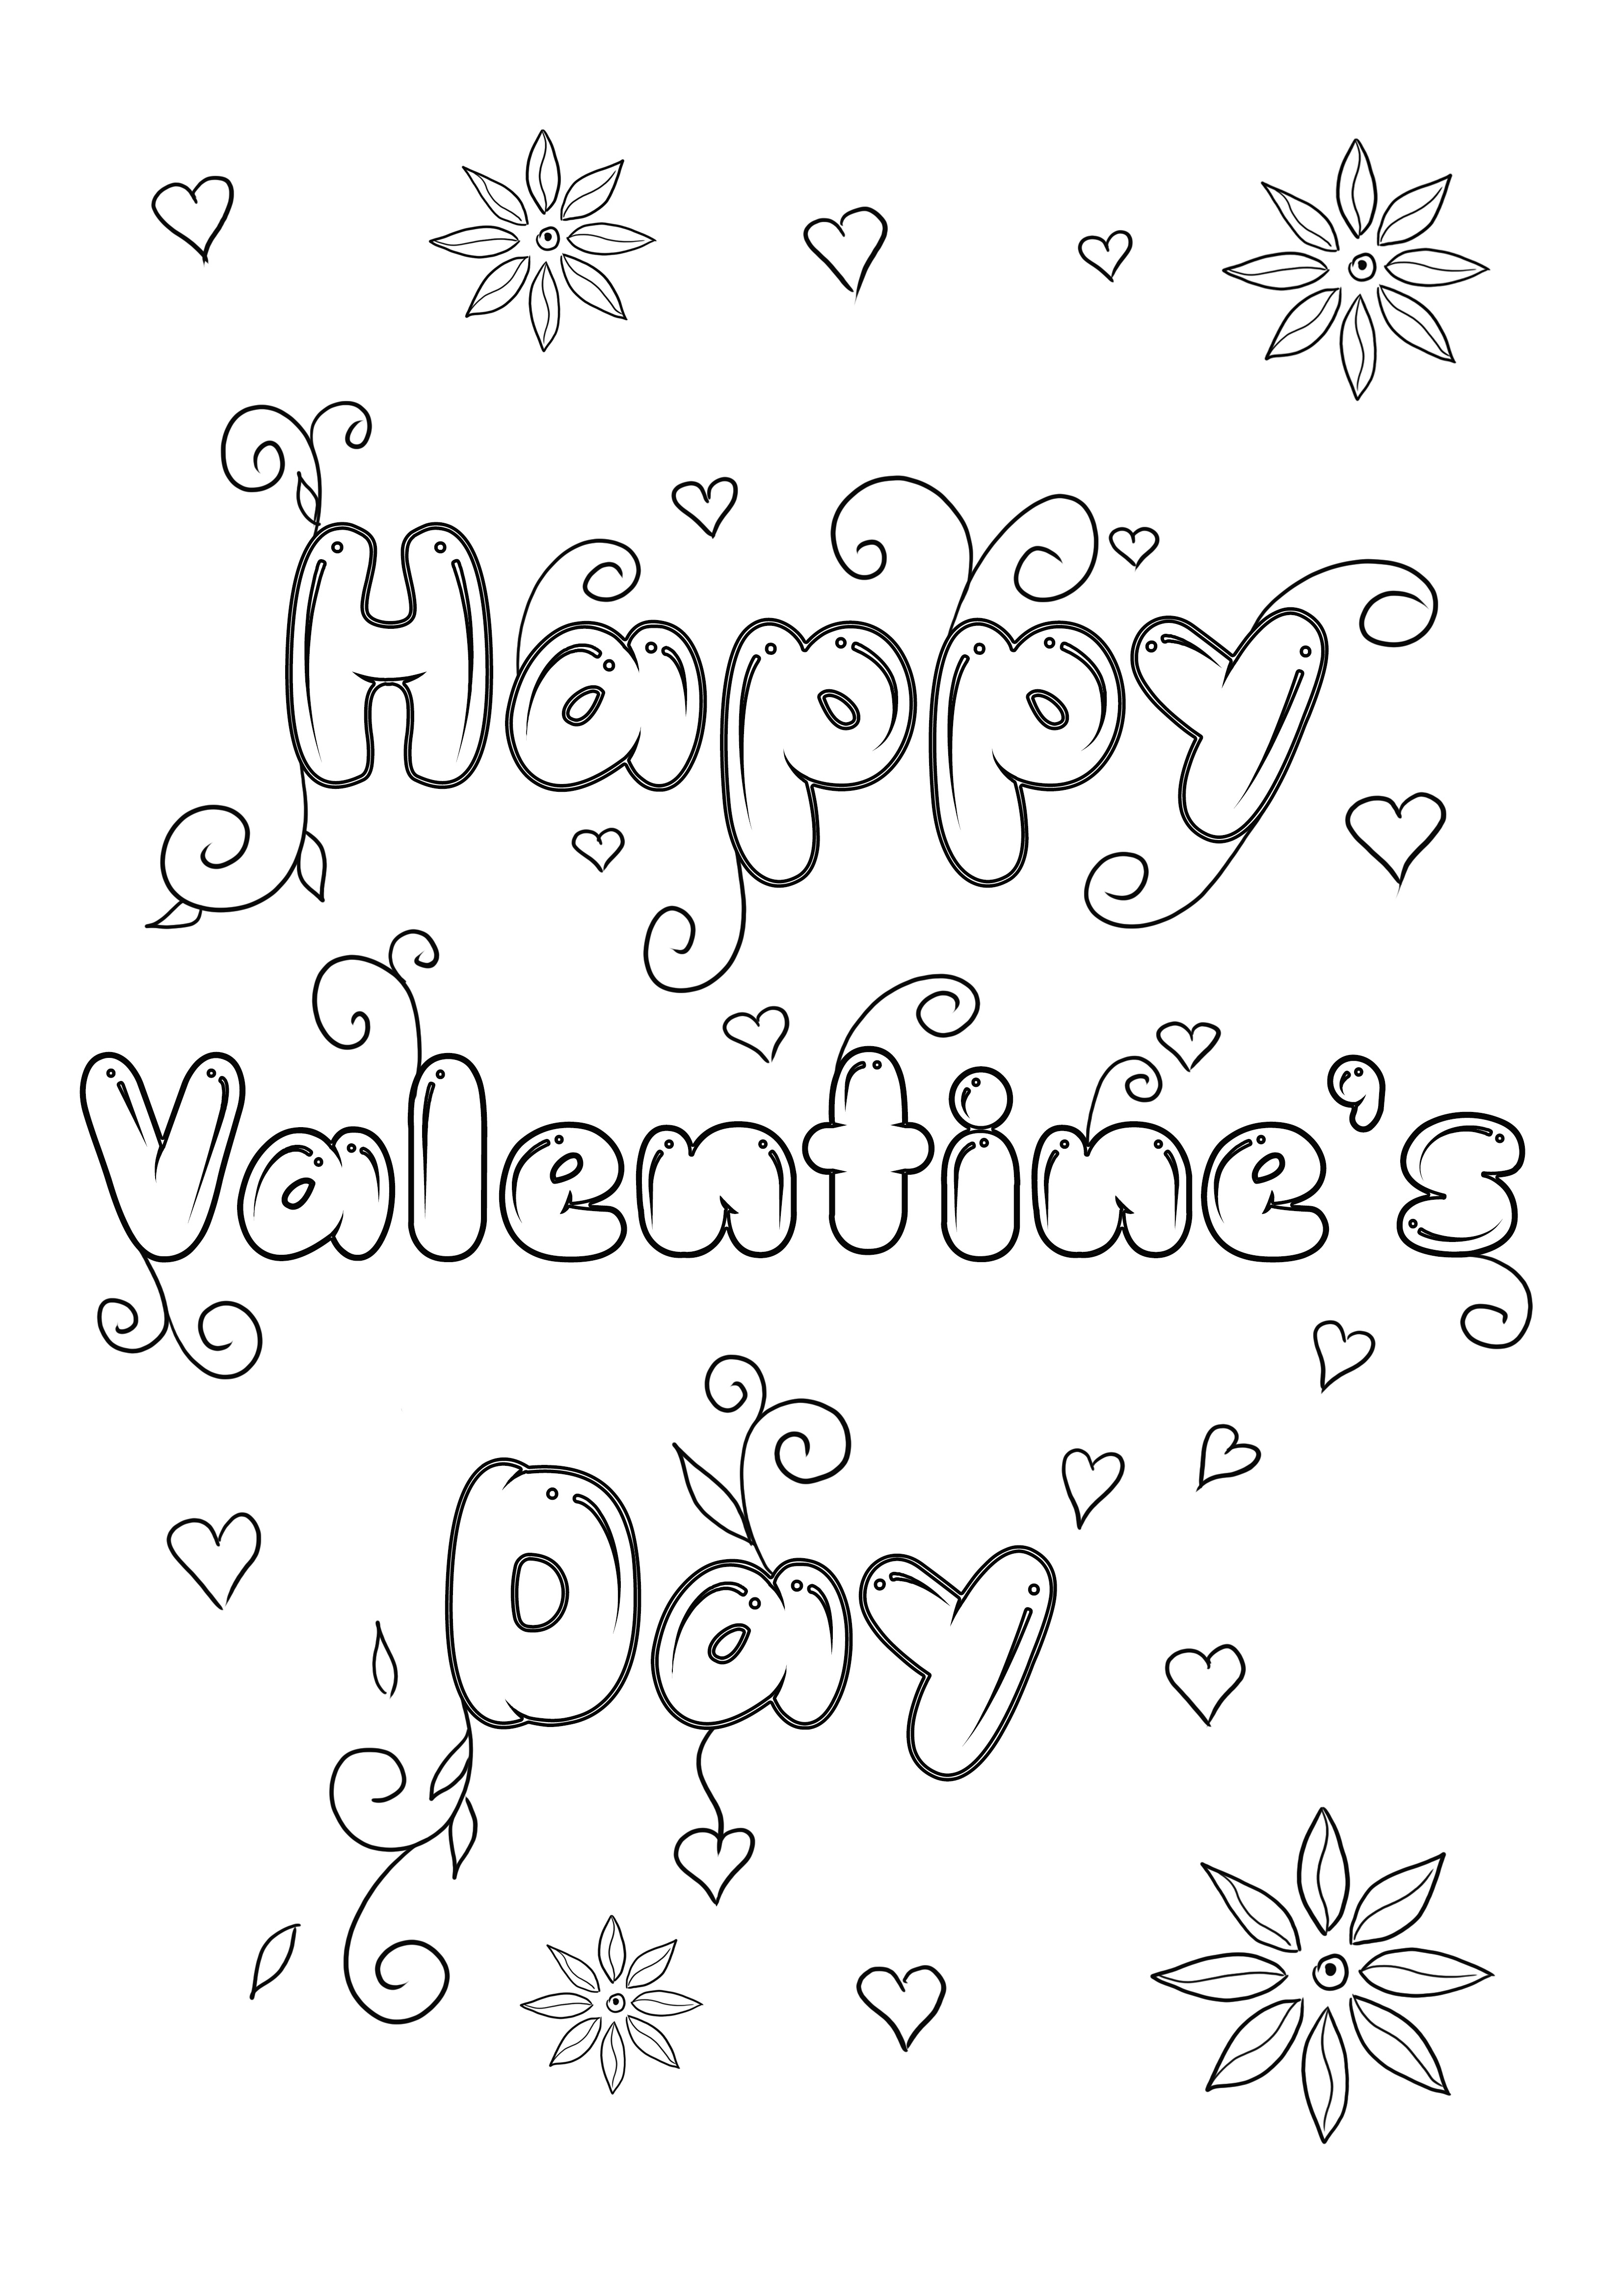 Feliz Día de San Valentín descarga o imprime gratis para colorear para niños con diversión